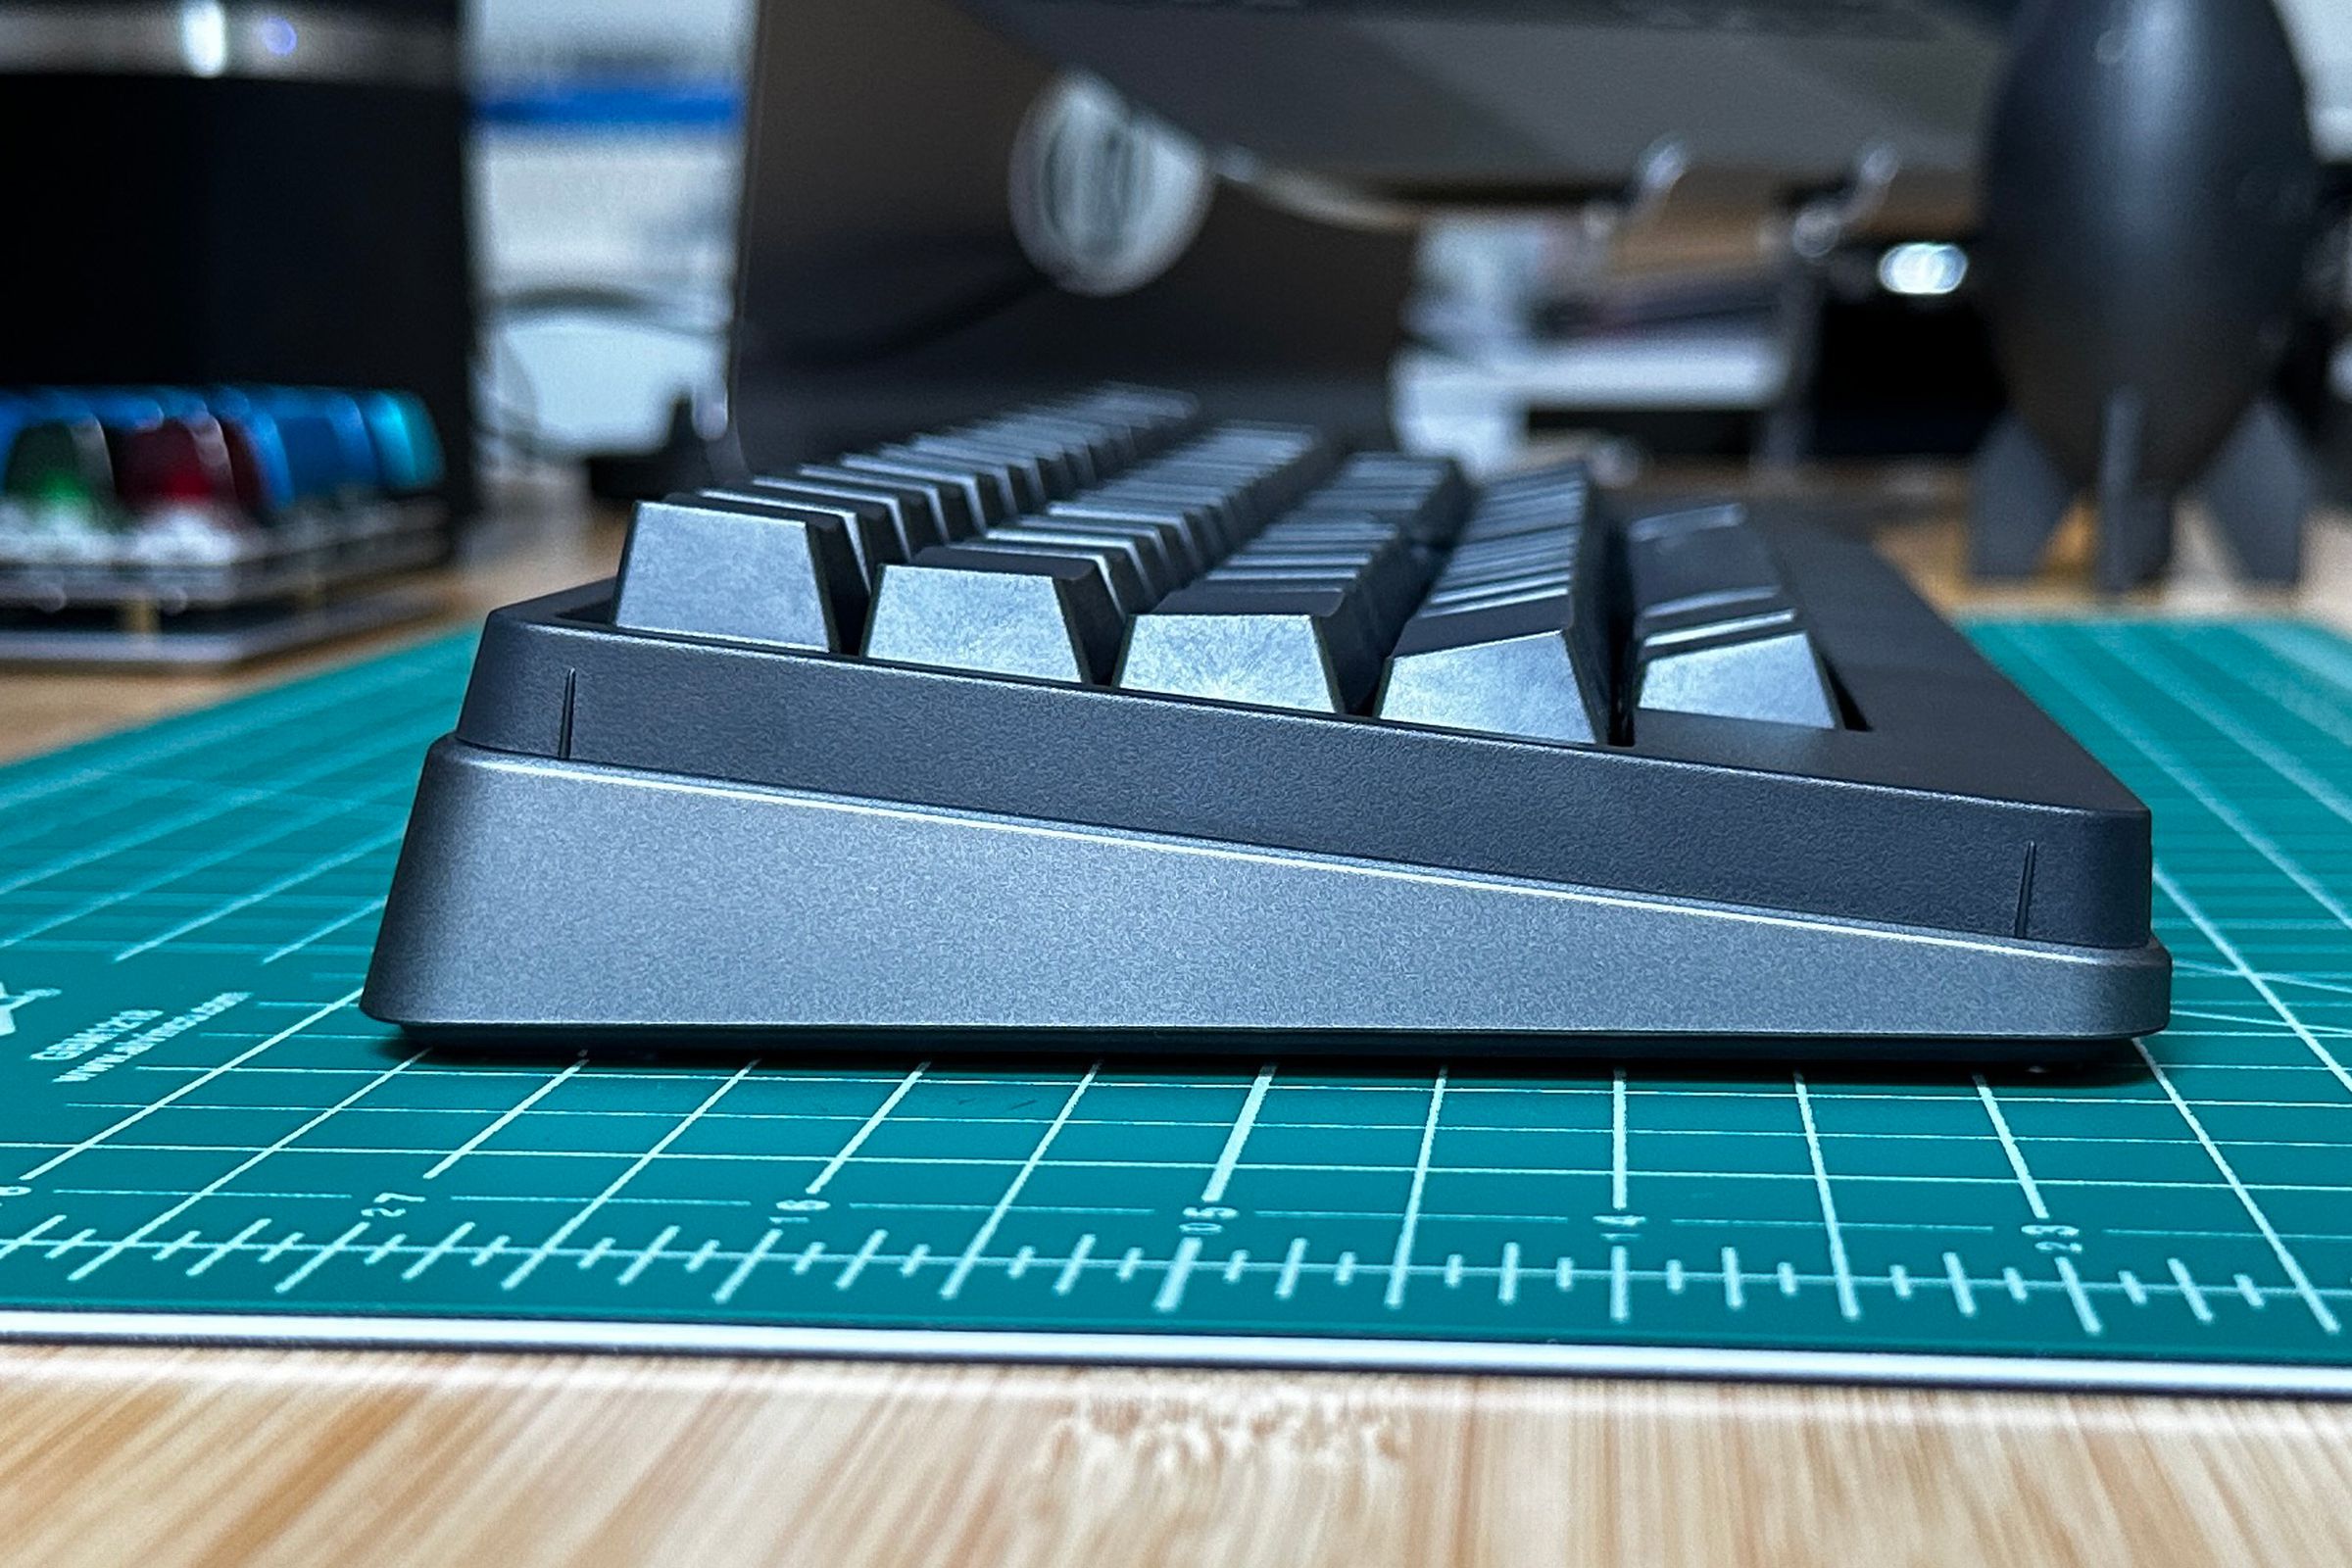 Side view of HHKB Studio keyboard